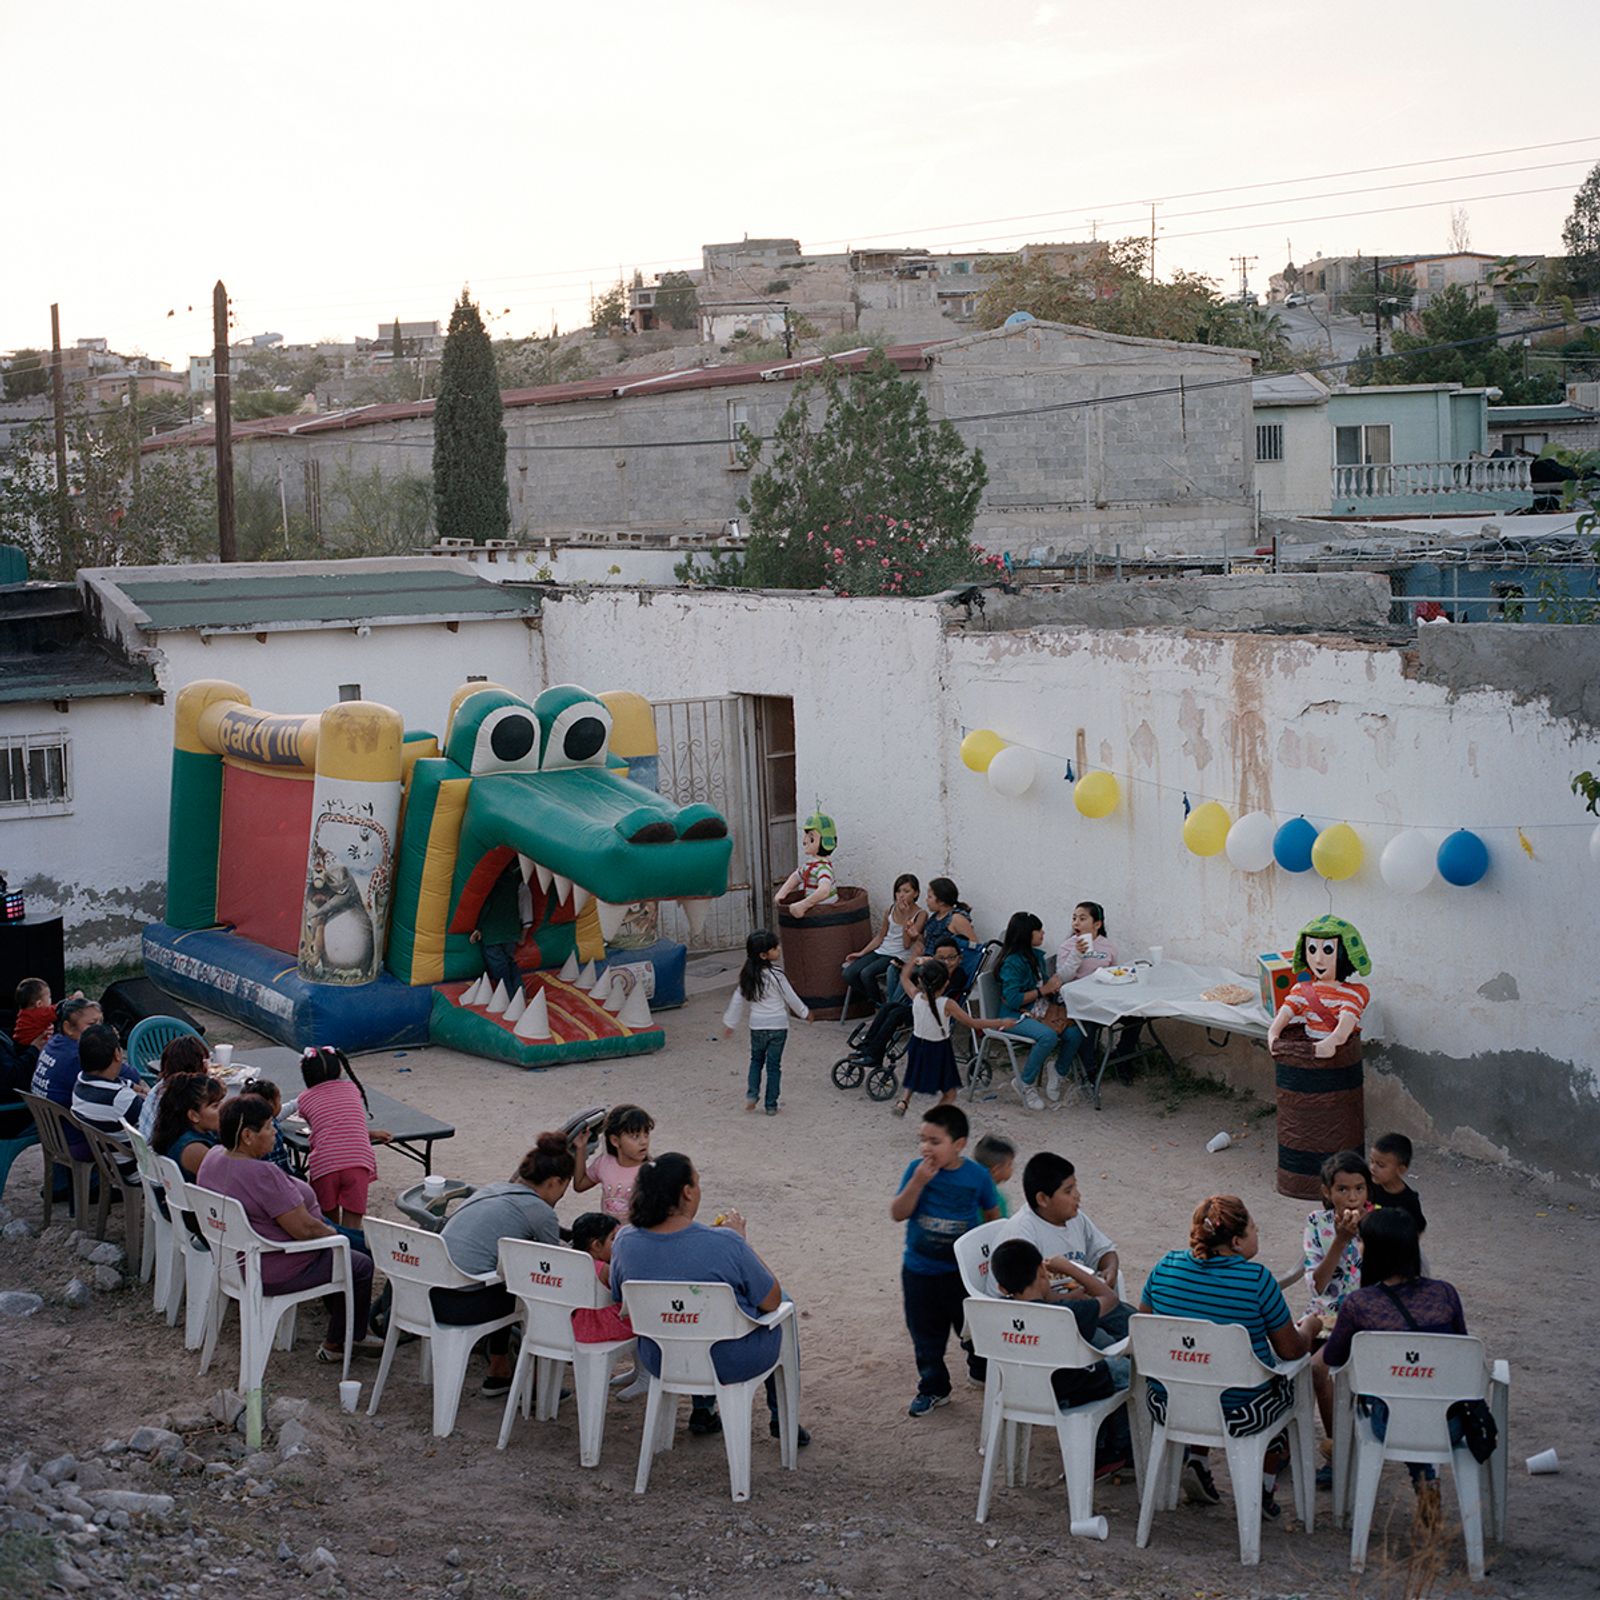 © Jordi Ruiz Cirera - The celebration of a kid’s birthday attracts numerous friends and neighbours in Ciudad Juarez